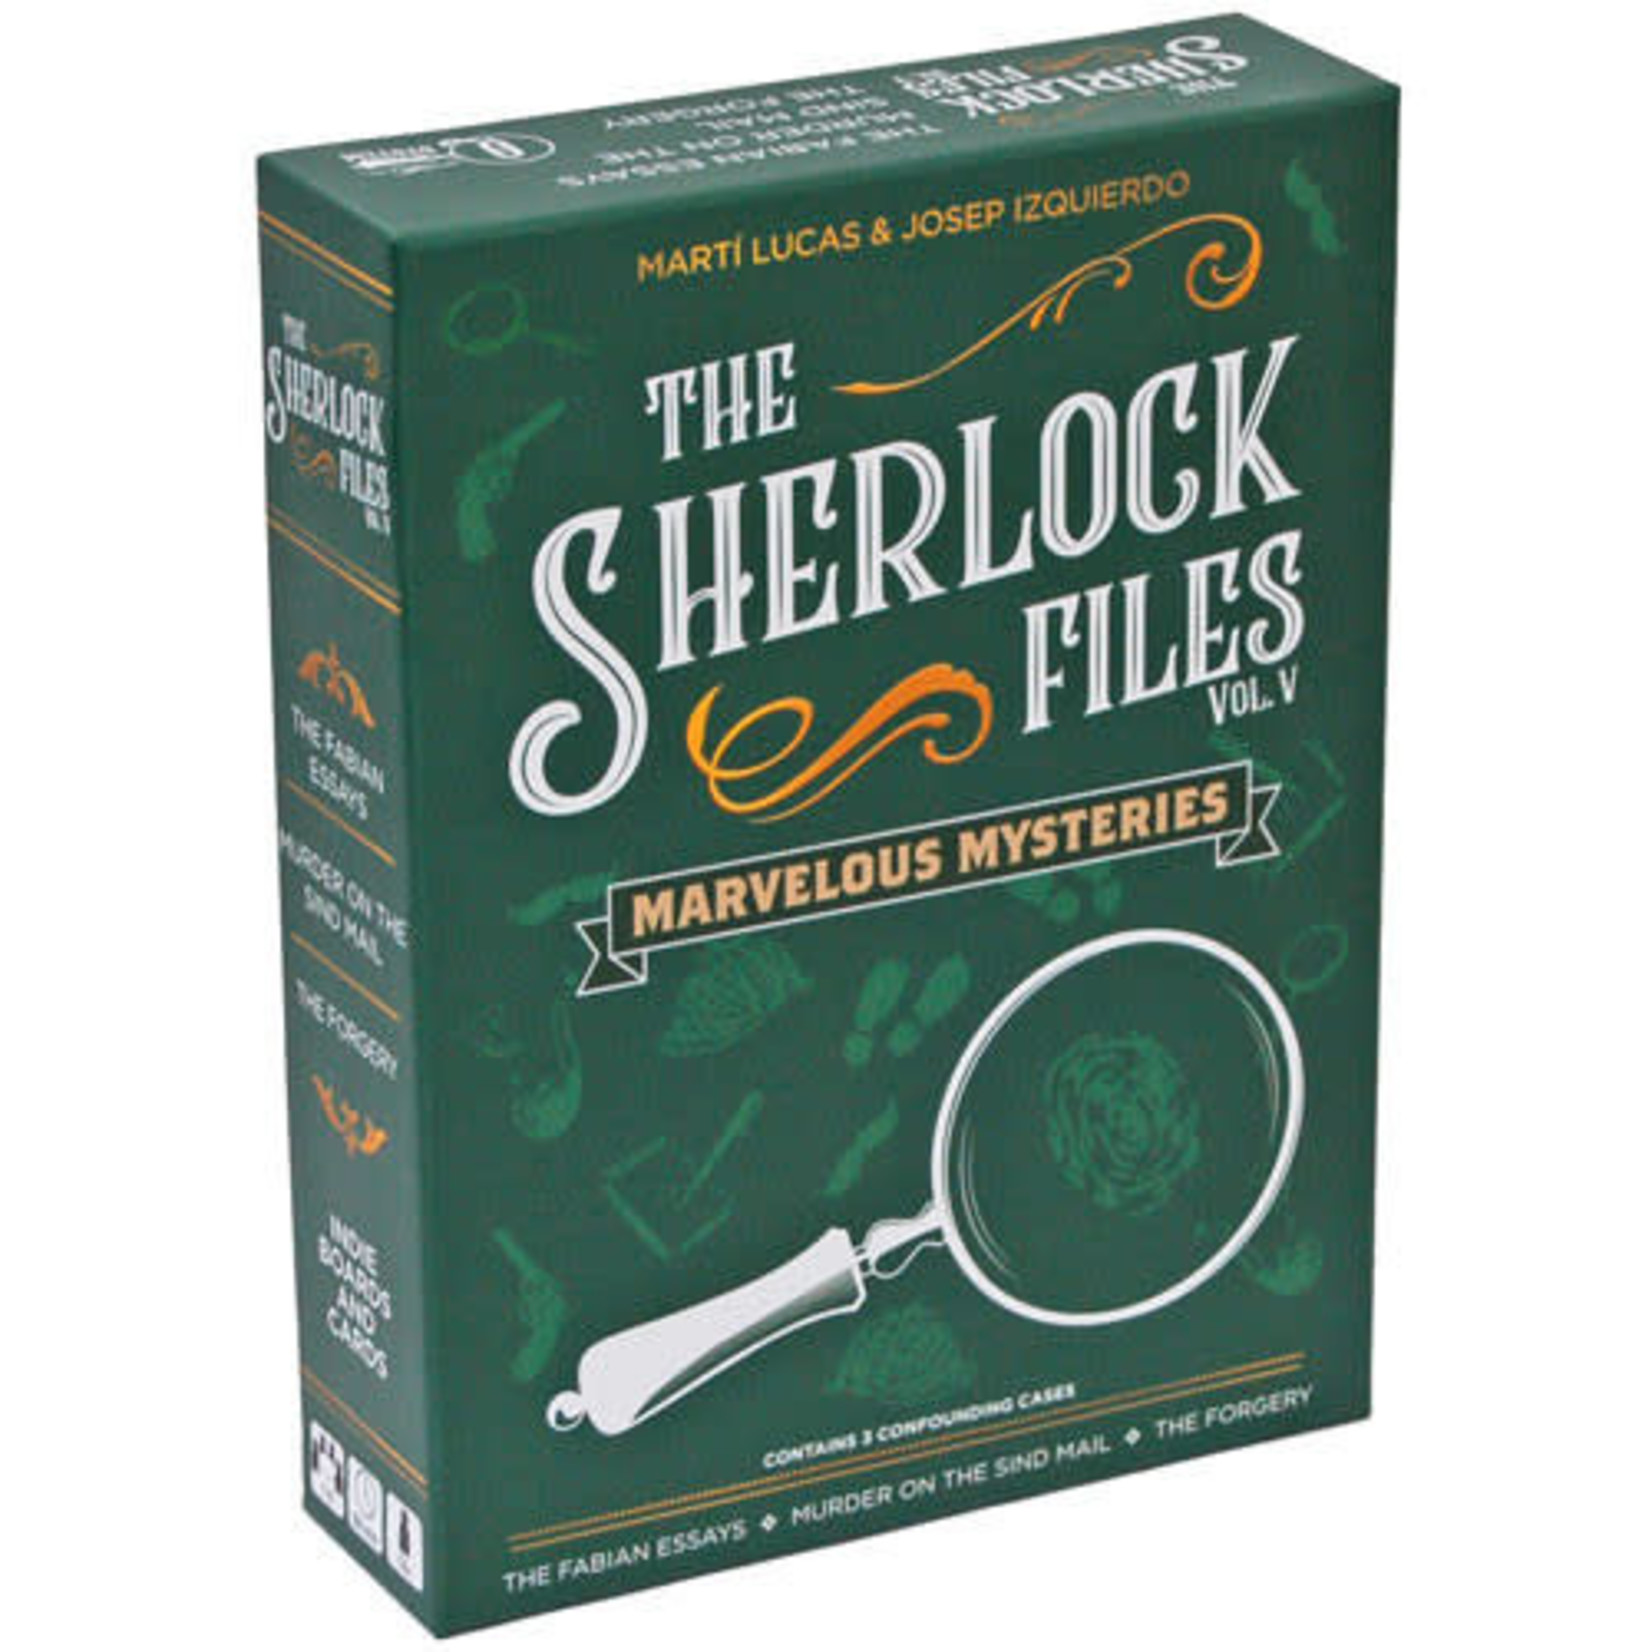 The Sherlock Files Vol 5 Marvelous Mysteries